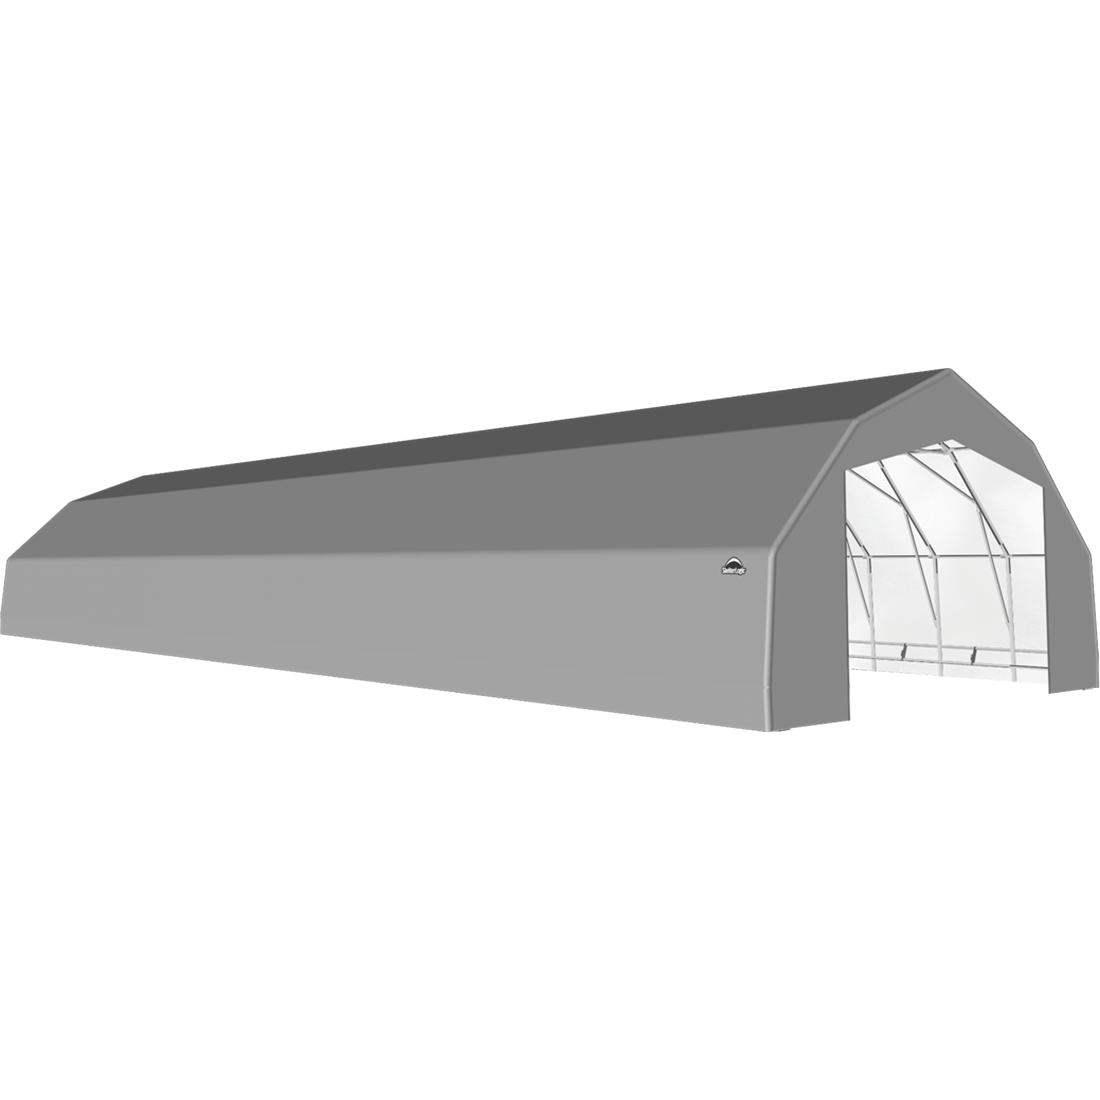 ShelterTech SP Series Barn Shelter, 25 ft. x 72 ft. x 14 ft. Heavy Duty PVC 14.5 oz. Gray